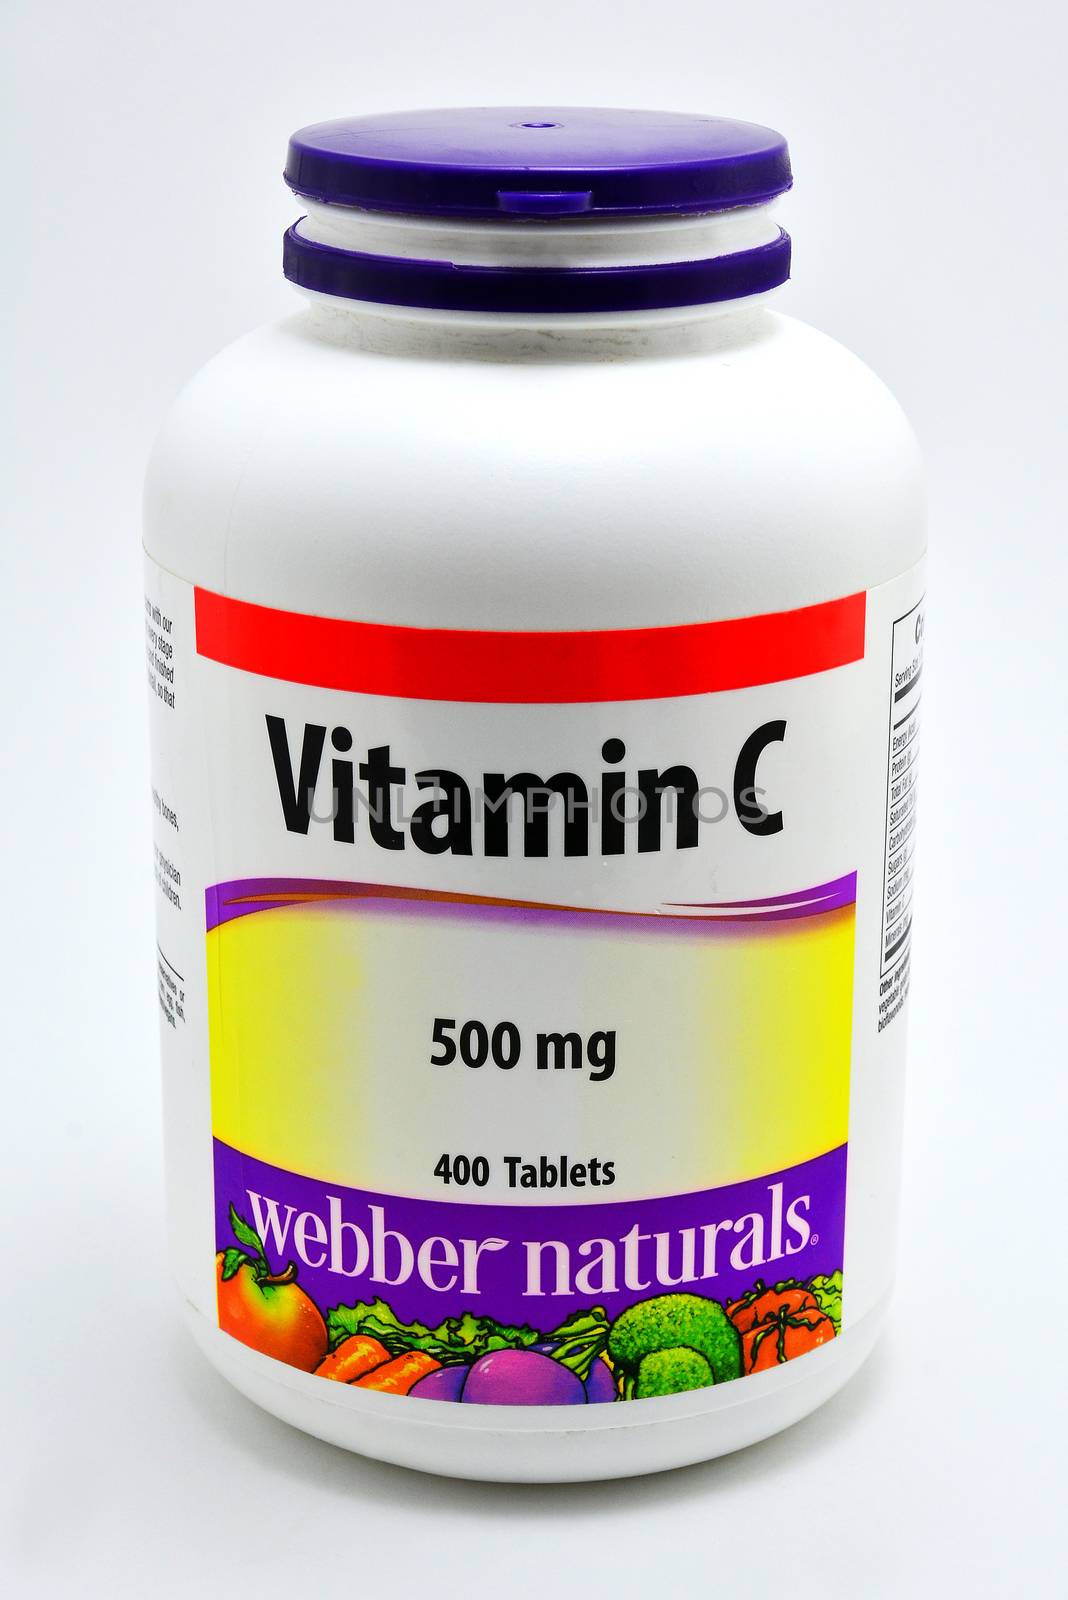 MANILA, PH - JULY 10 - Webber naturals vitamin c bottle on July 10, 2020 in Manila, Philippines.